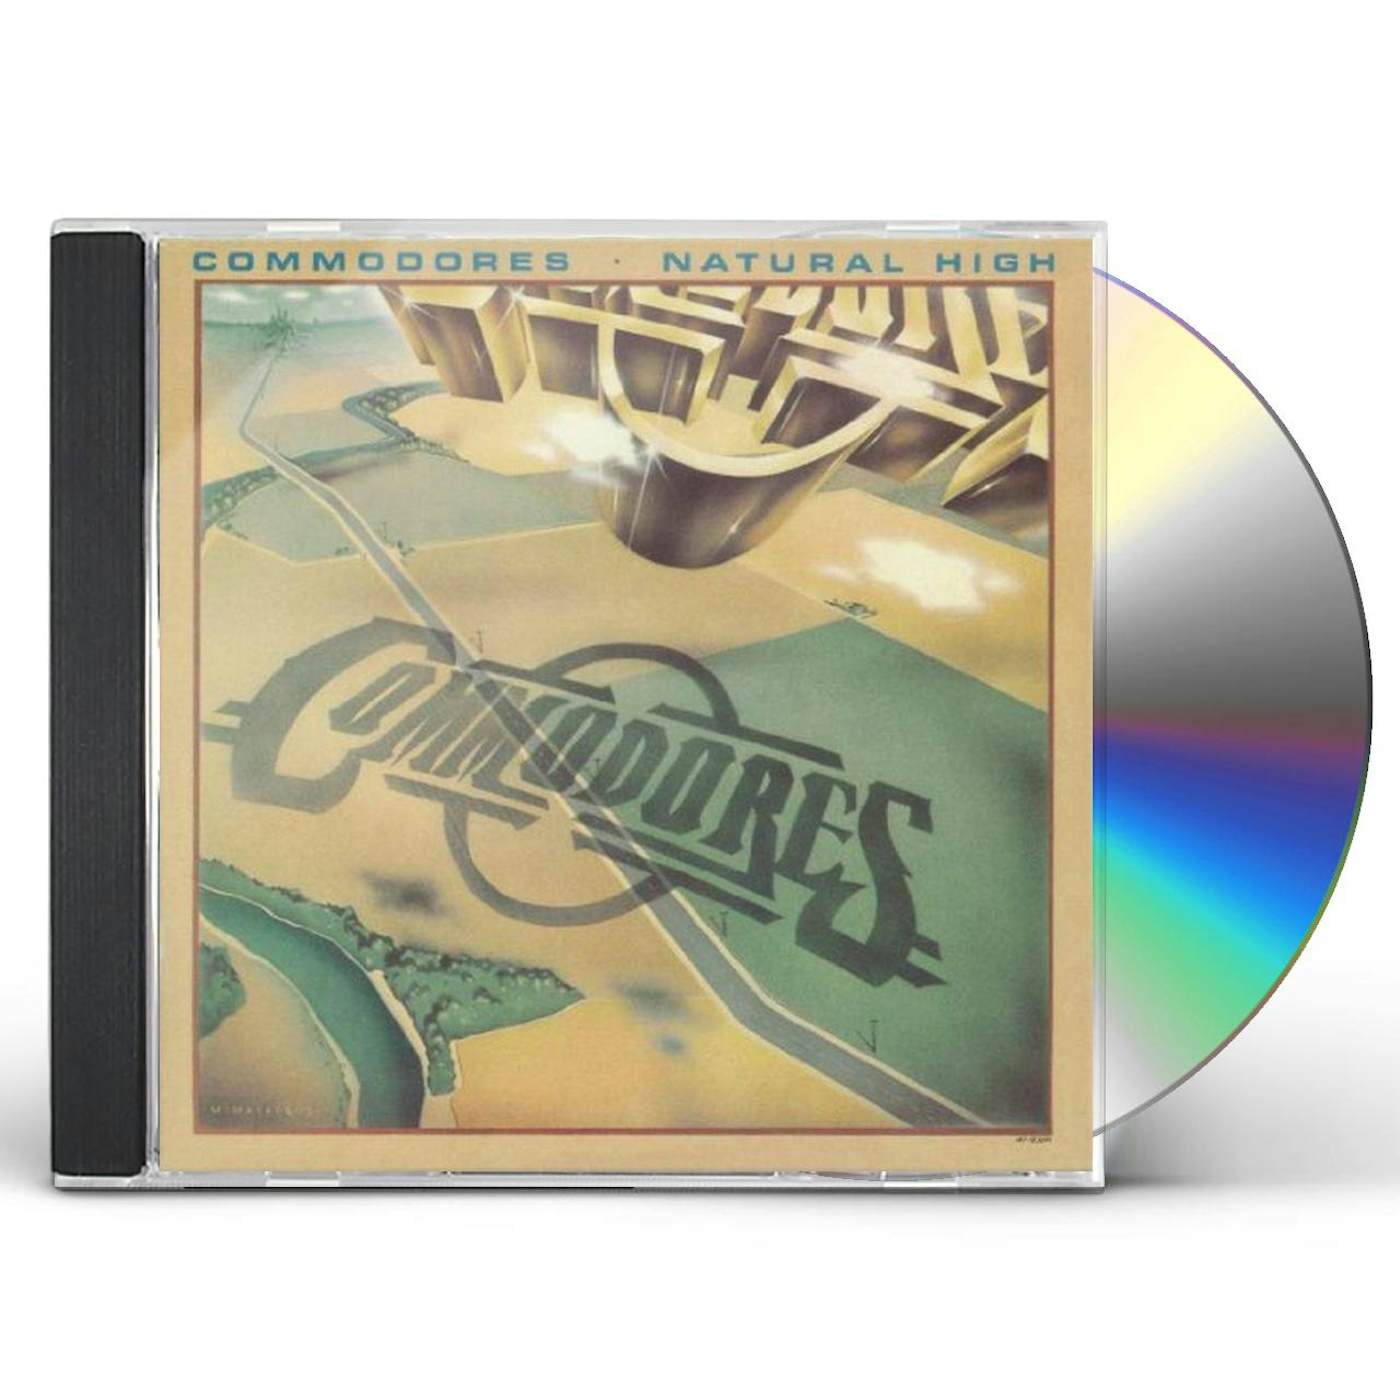 Commodores NATURAL HIGH CD